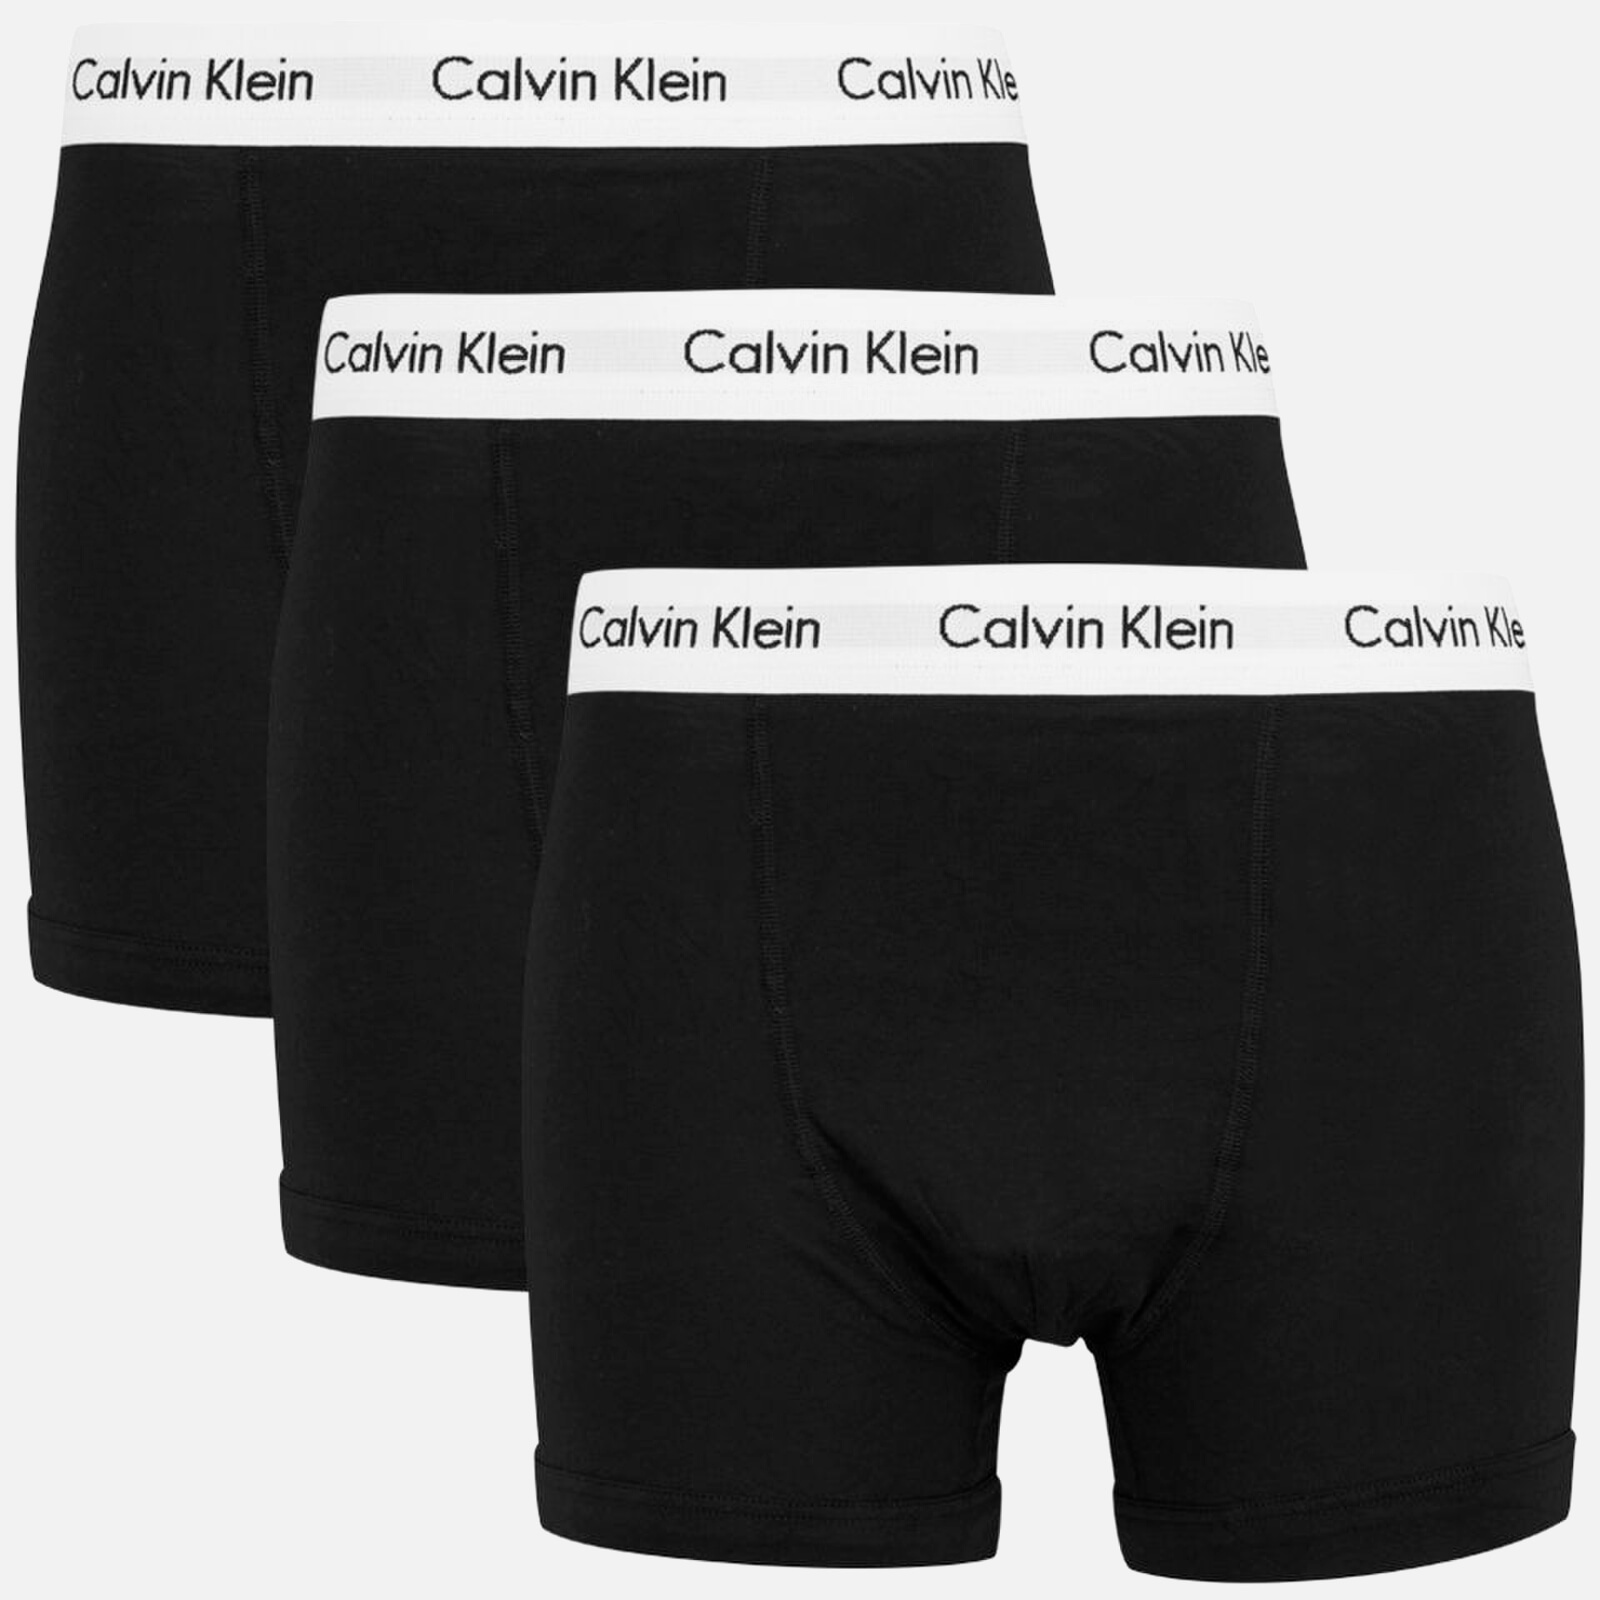 Image of Calvin Klein Men's Cotton Stretch 3-Pack Trunks - Black - S